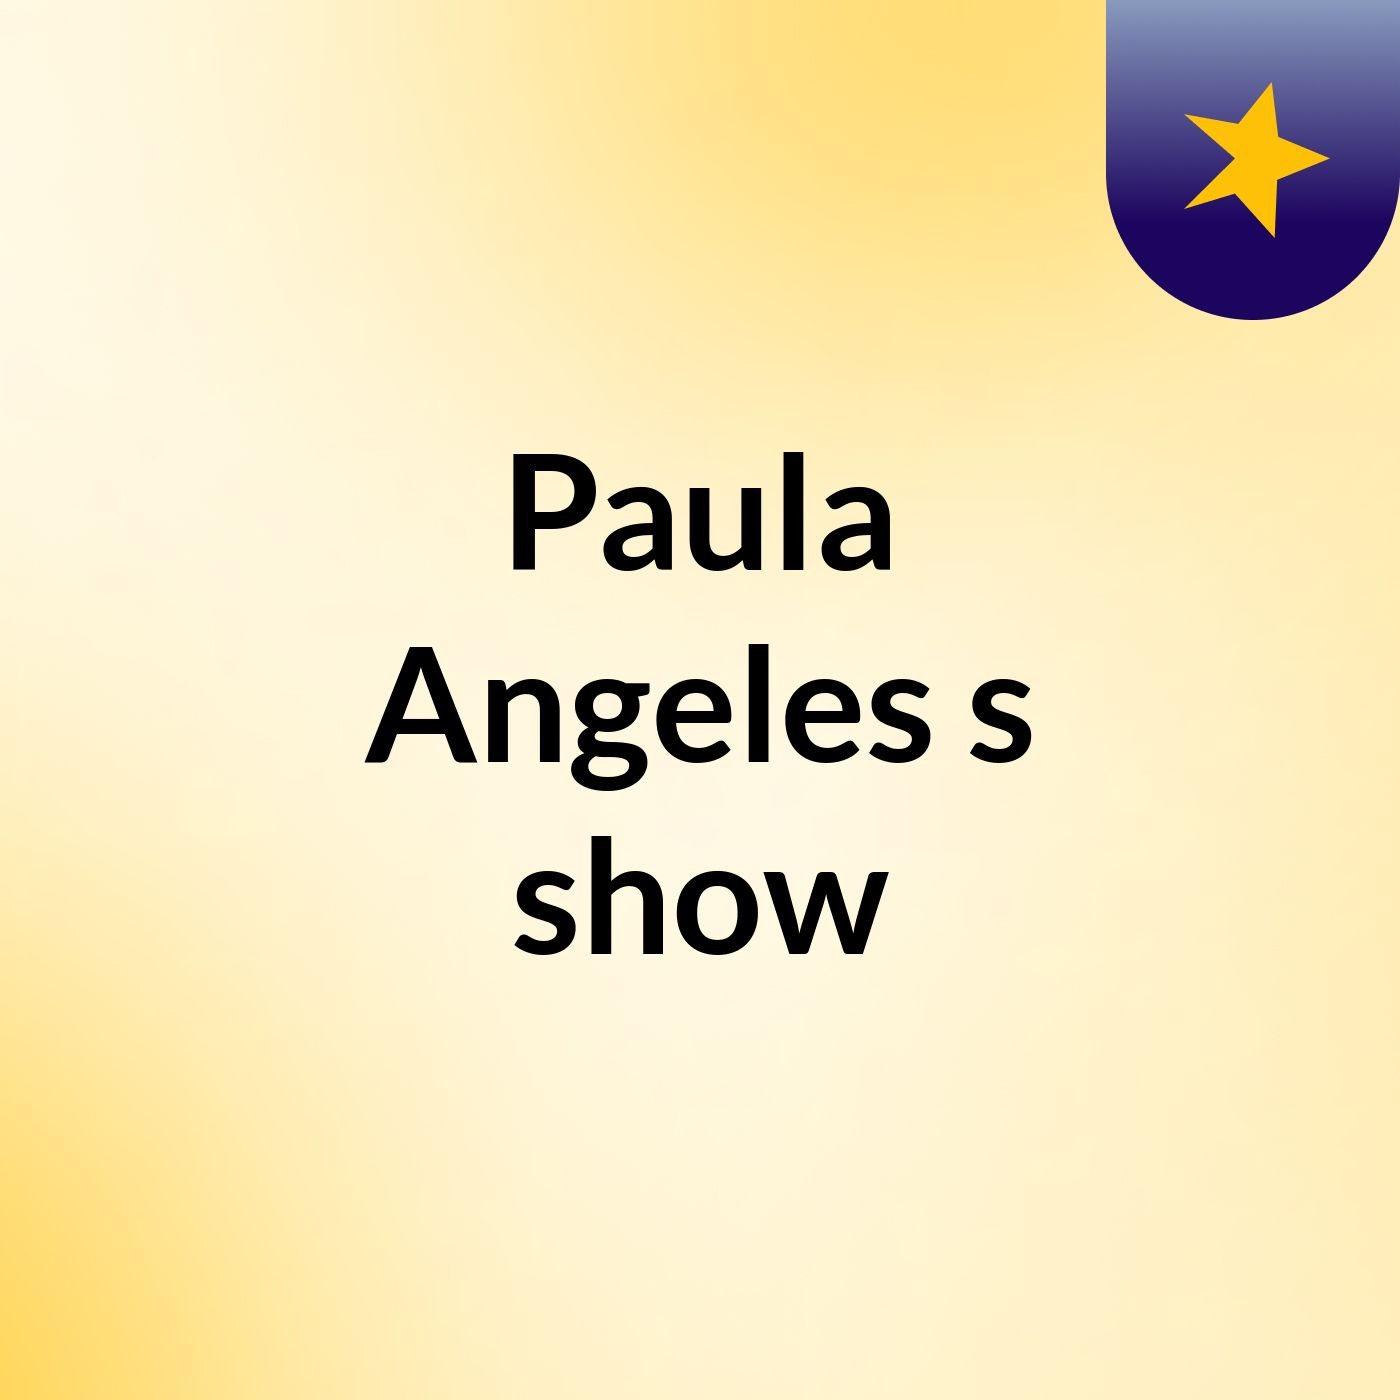 Paula Angeles's show